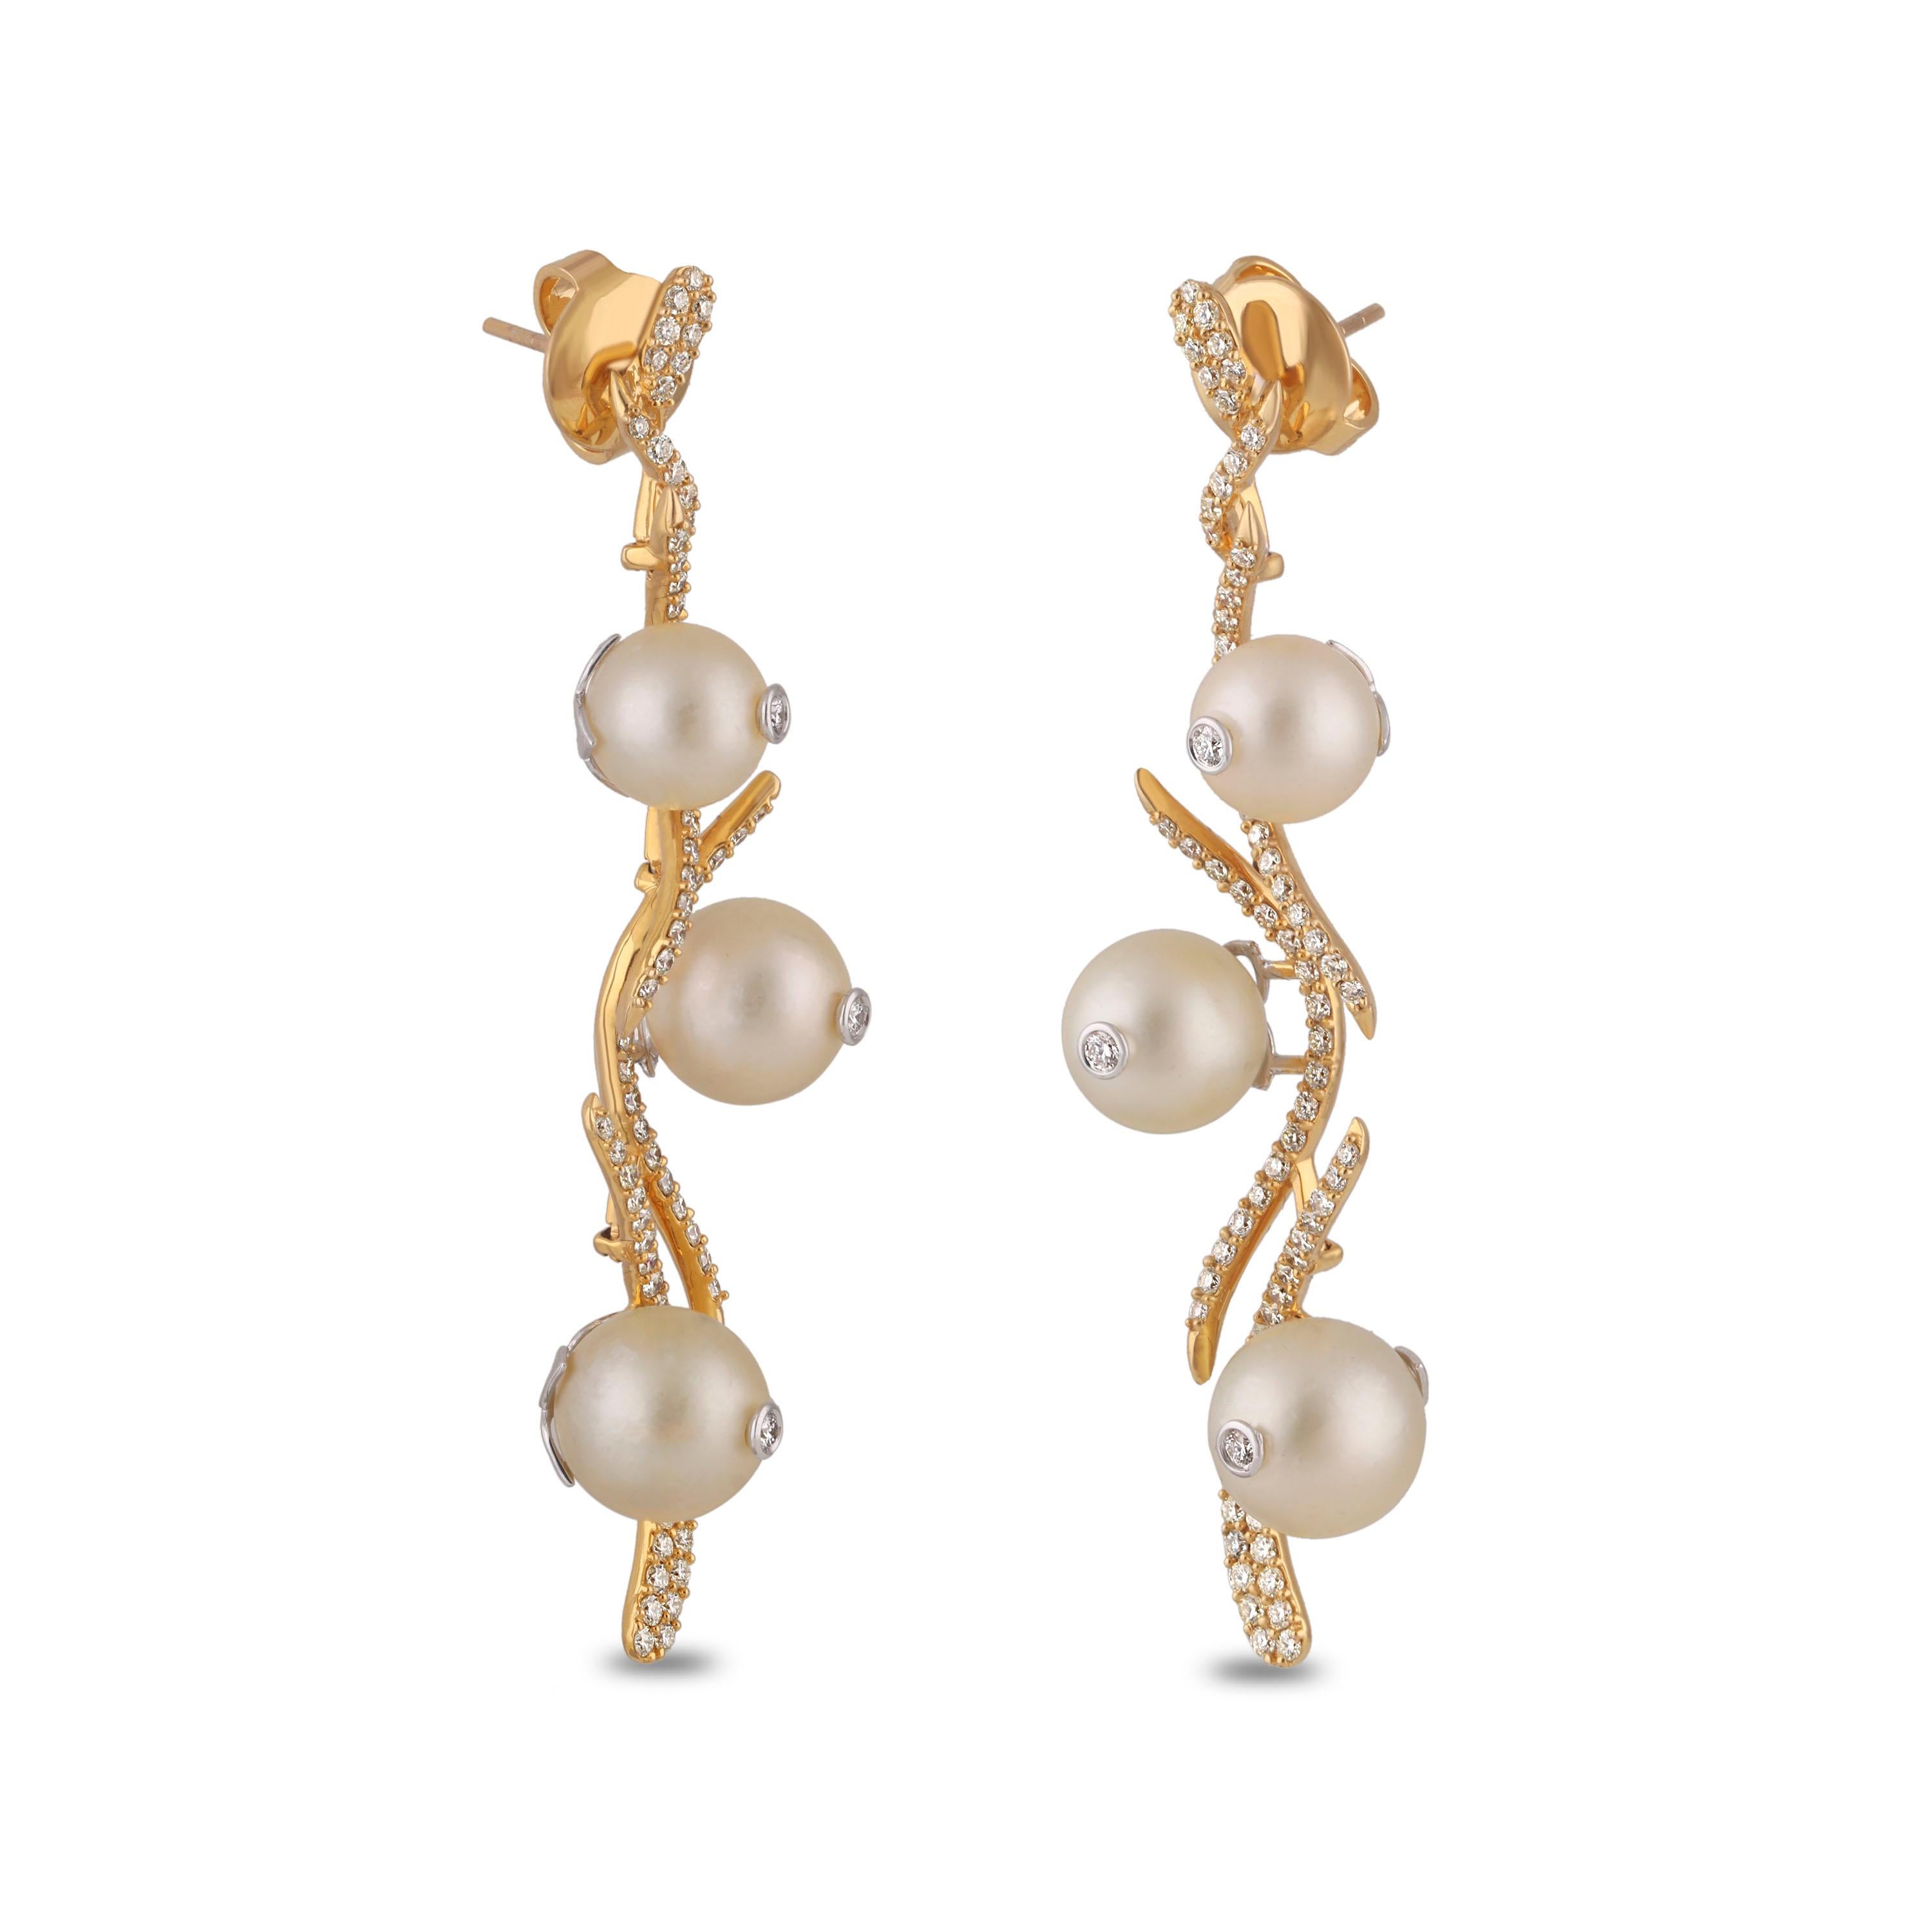 Studio RêvesC Floral Themed Diamond and Pearl Dangling Earrings in 18K Gold For Sale 1